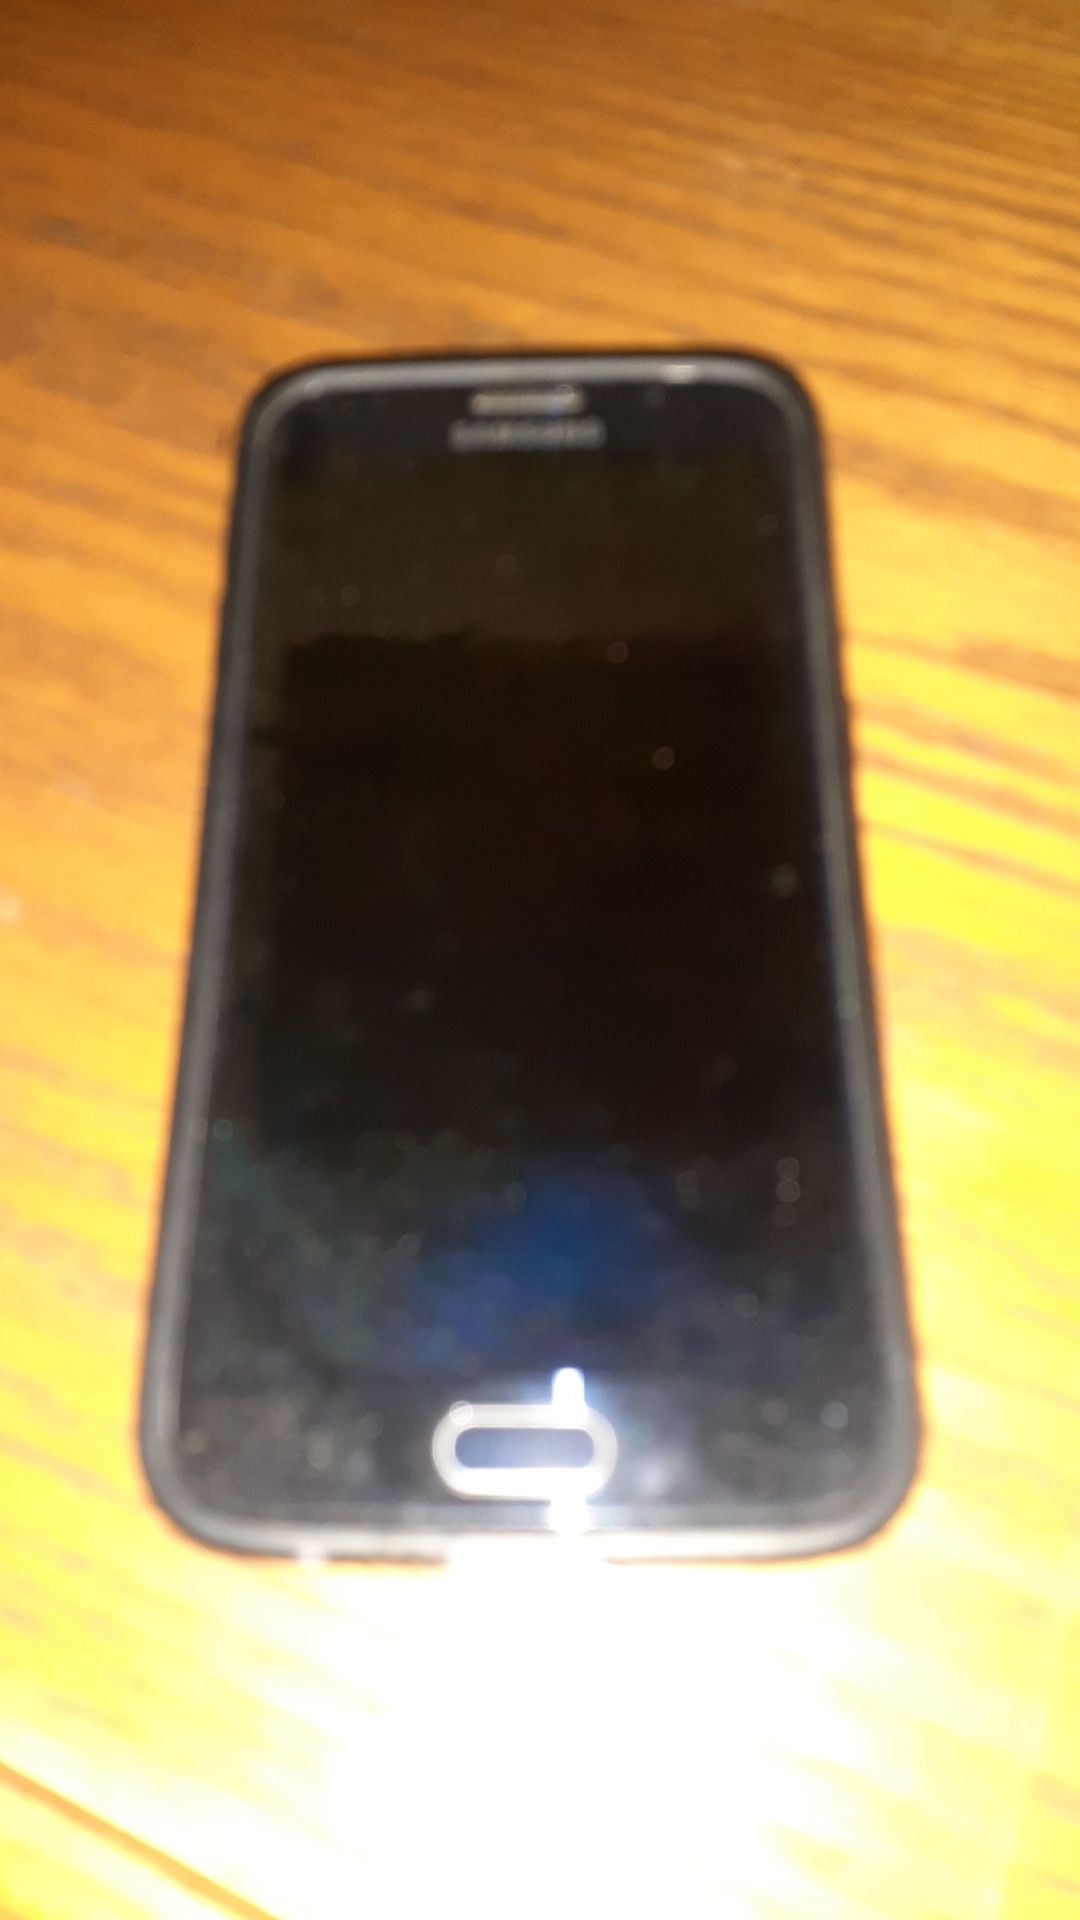 Samsung S6 phone